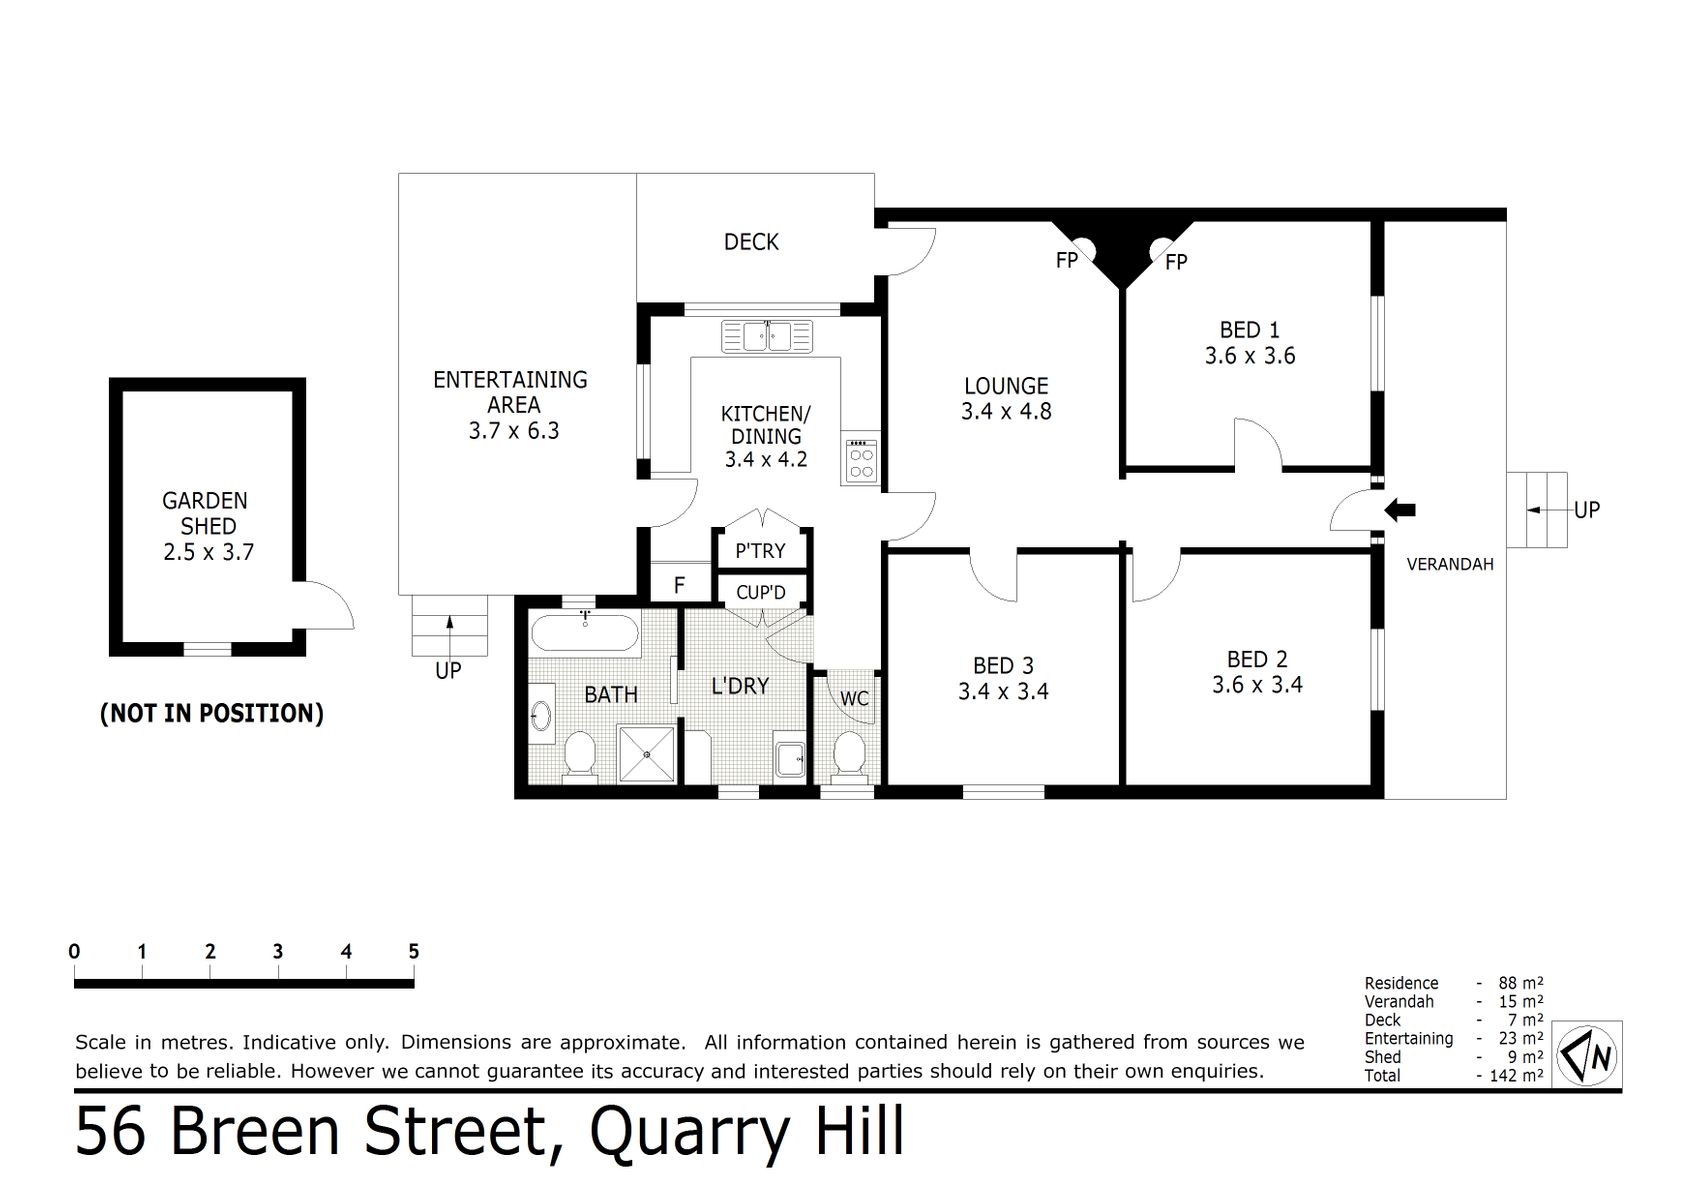 56 Breen Street Quarry Hill (03 AUG 2020) 88sqm